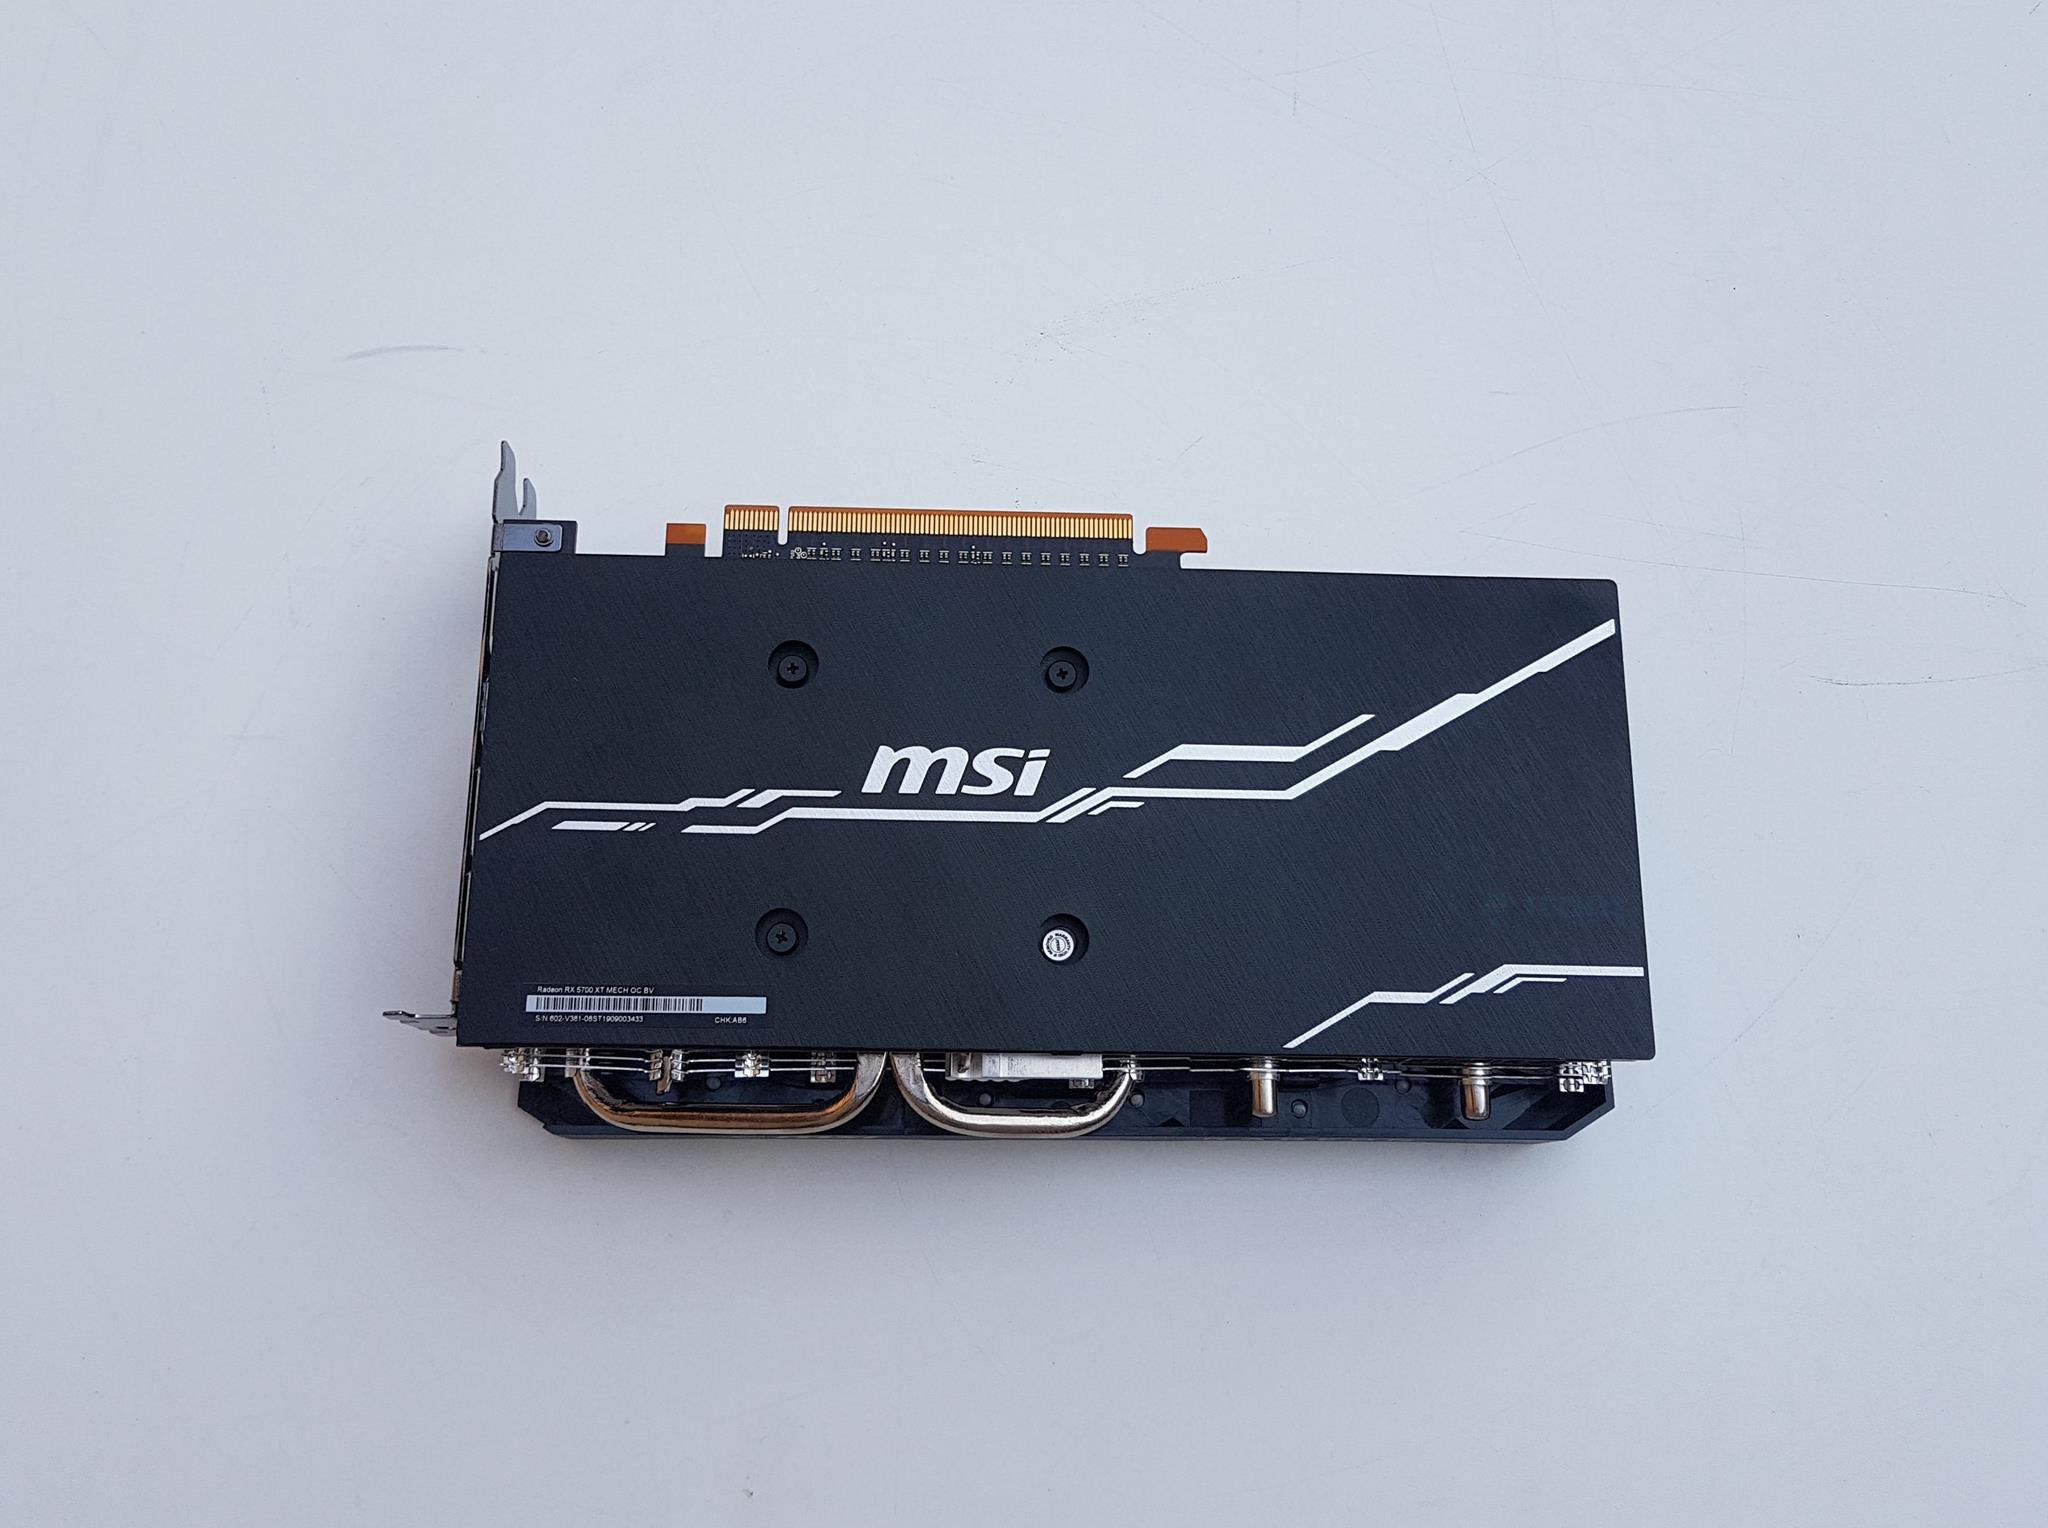 MSI Radeon RX 5700 XT MECH OC Graphics Card Review 2023